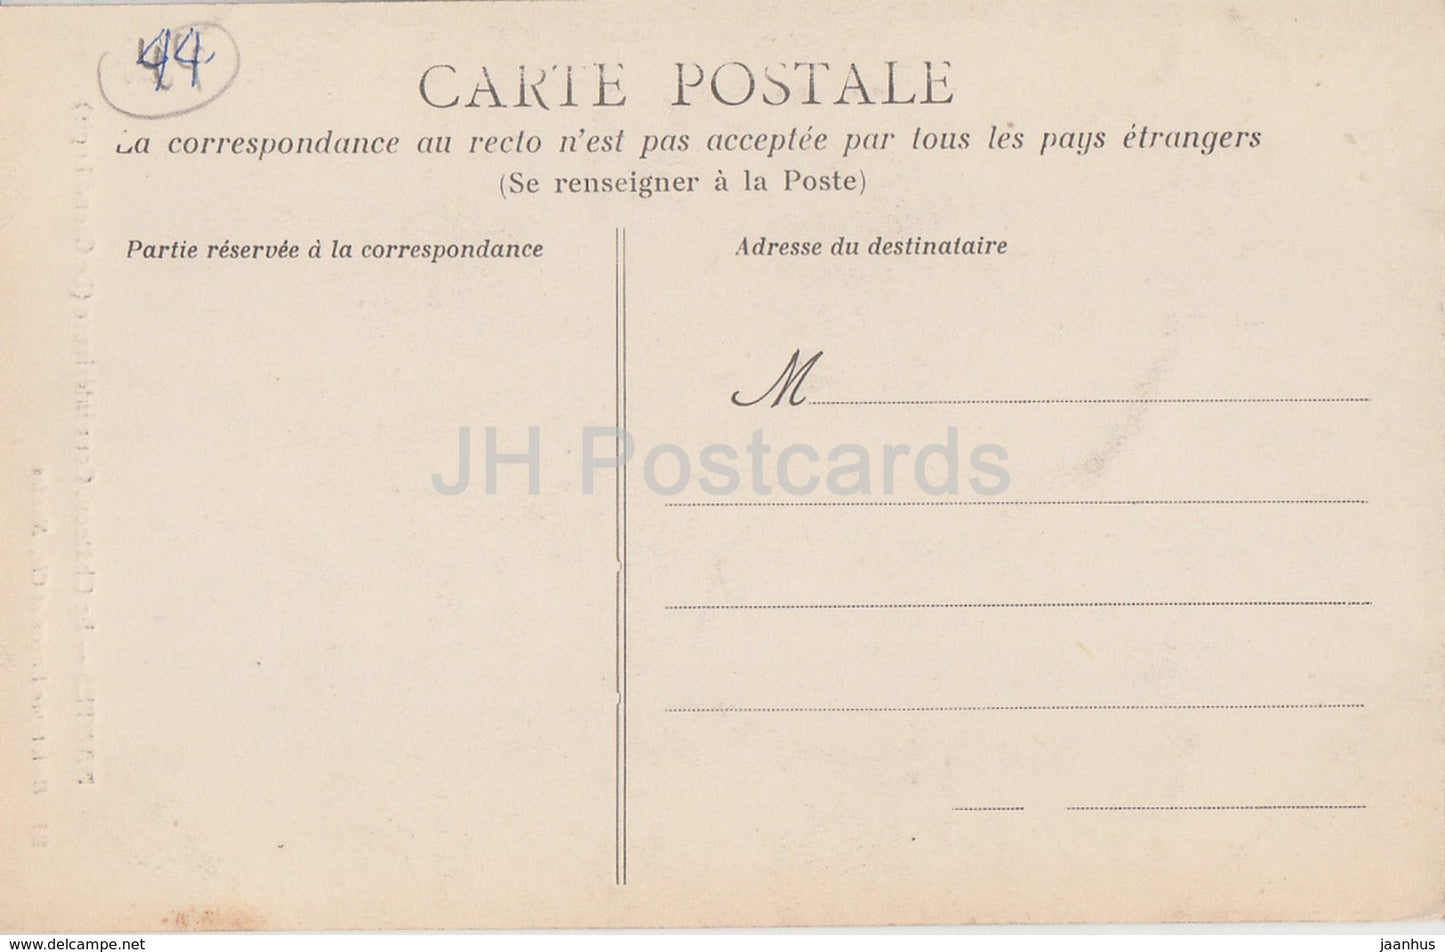 Nantes - Le Chateau - Cour Interieure - Le Grand Logis - 81 - old postcard - France - unused